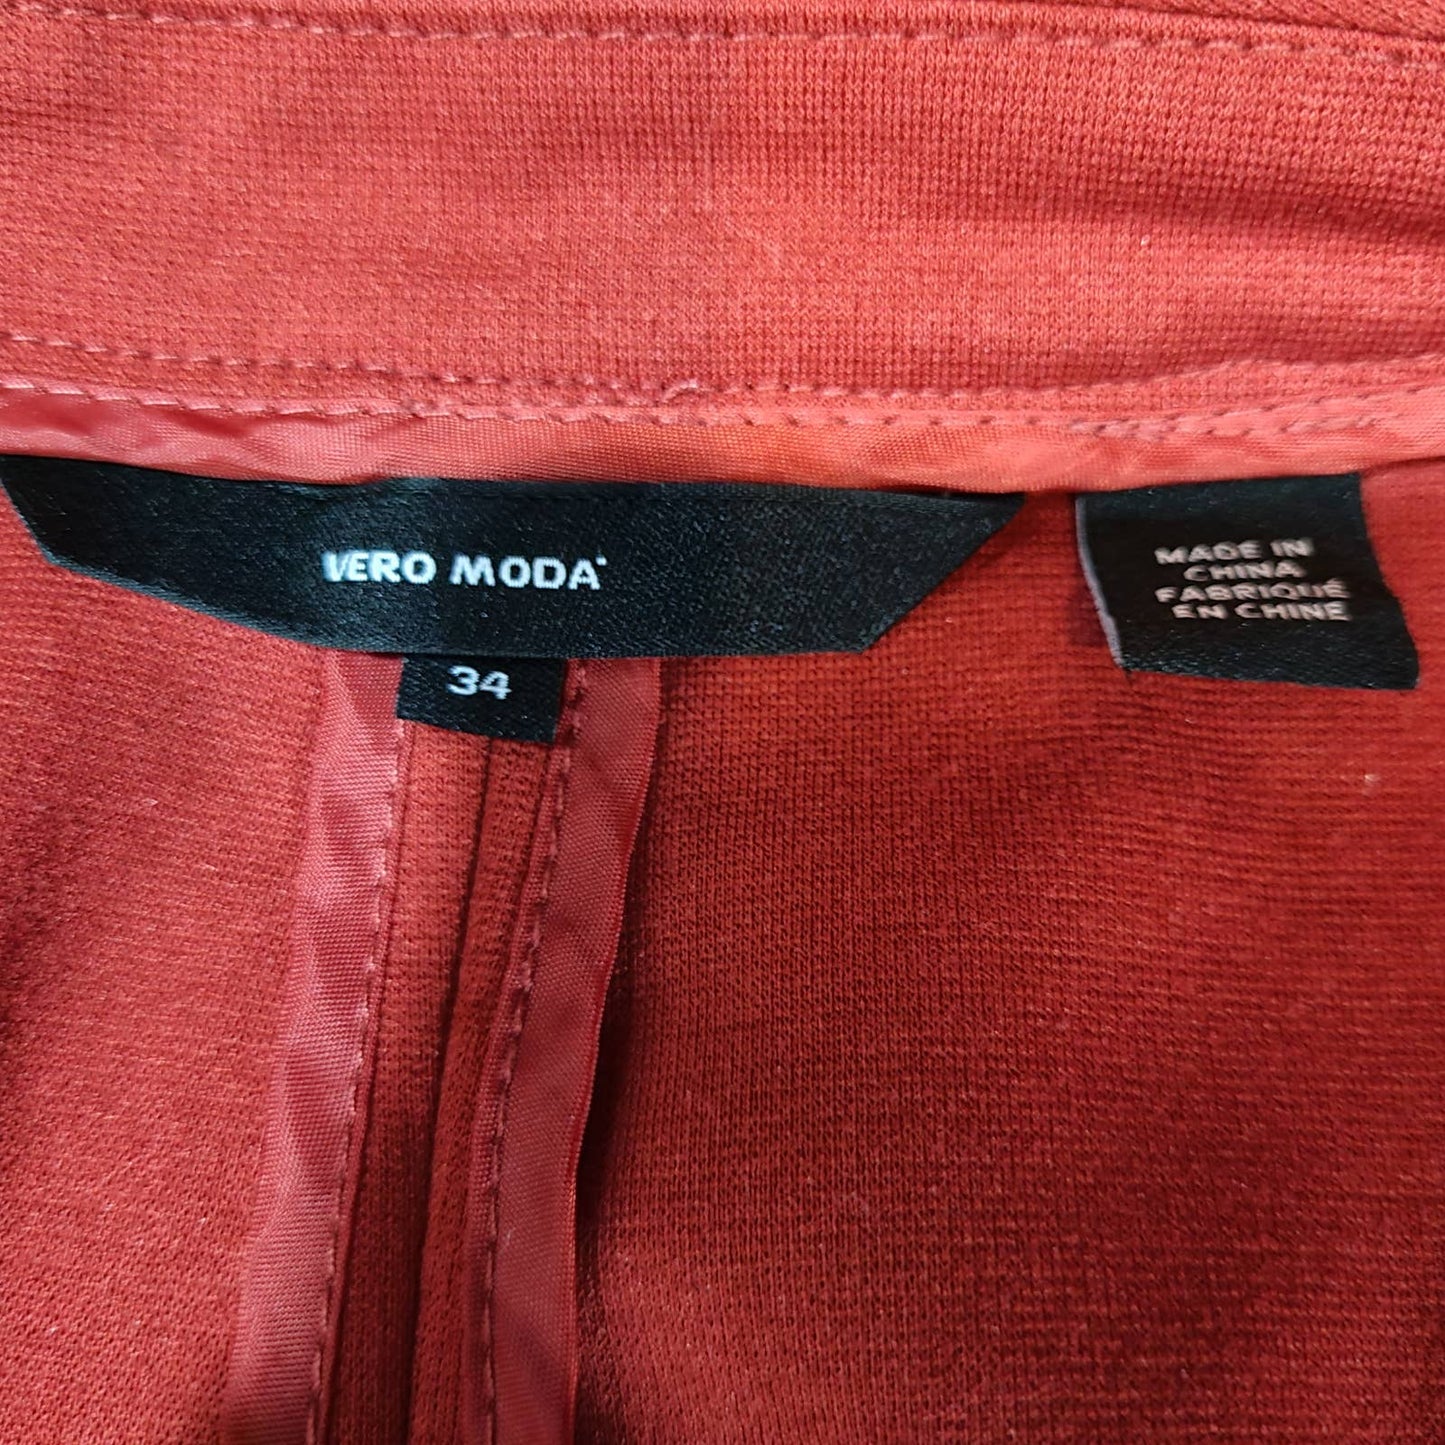 Vero Moda Orange Open Blazer - Size Extra Small